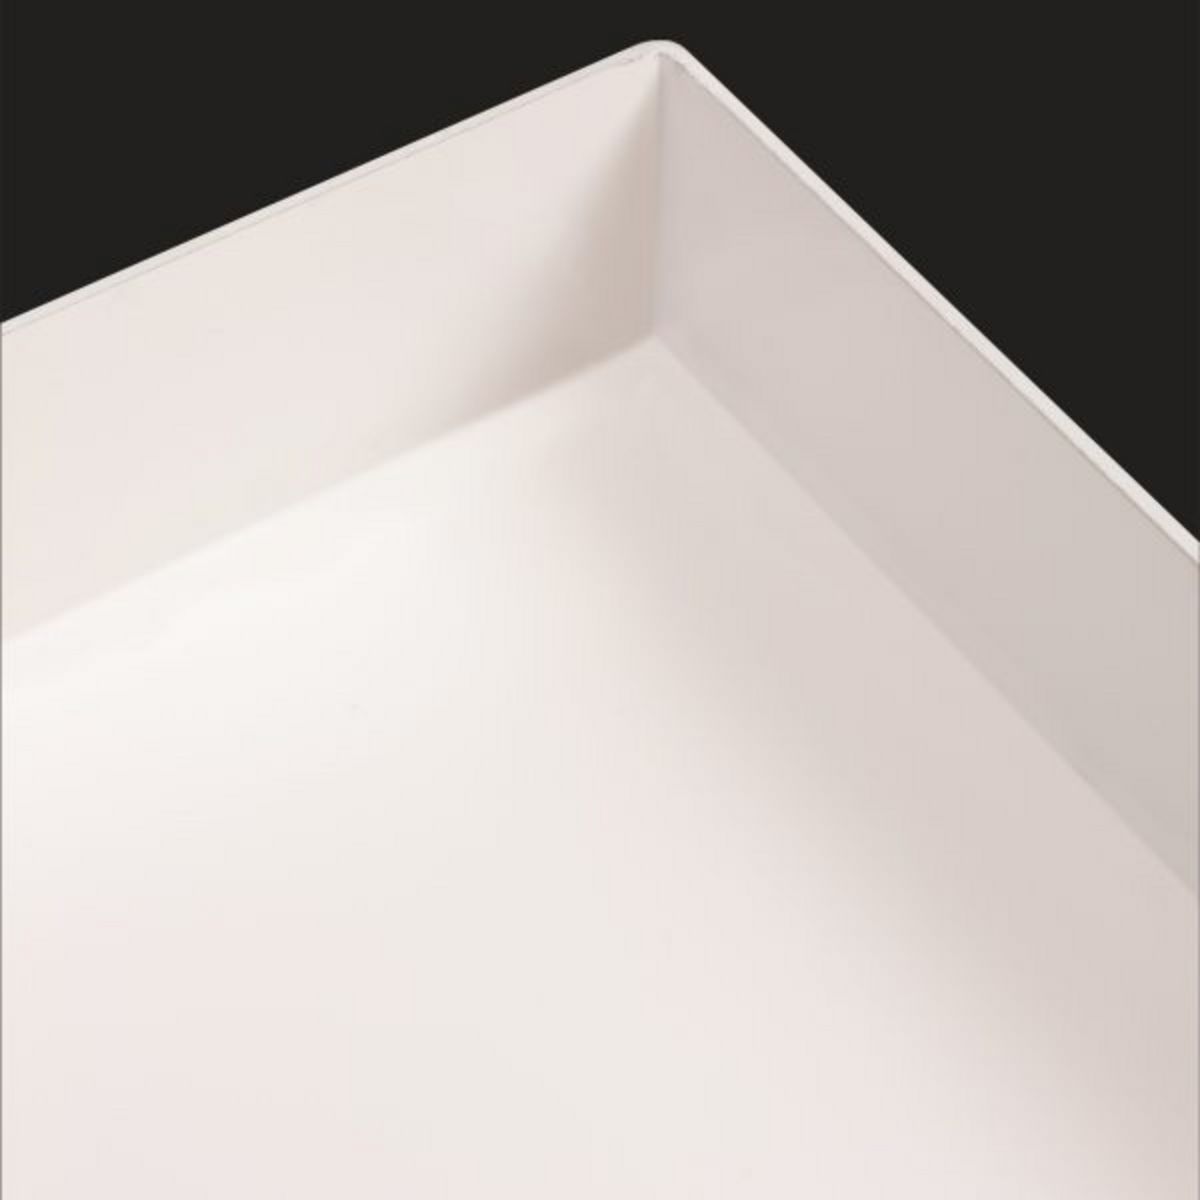 Powder Coated White Internal Corner Angle Aluminium Tray Sign.jpg